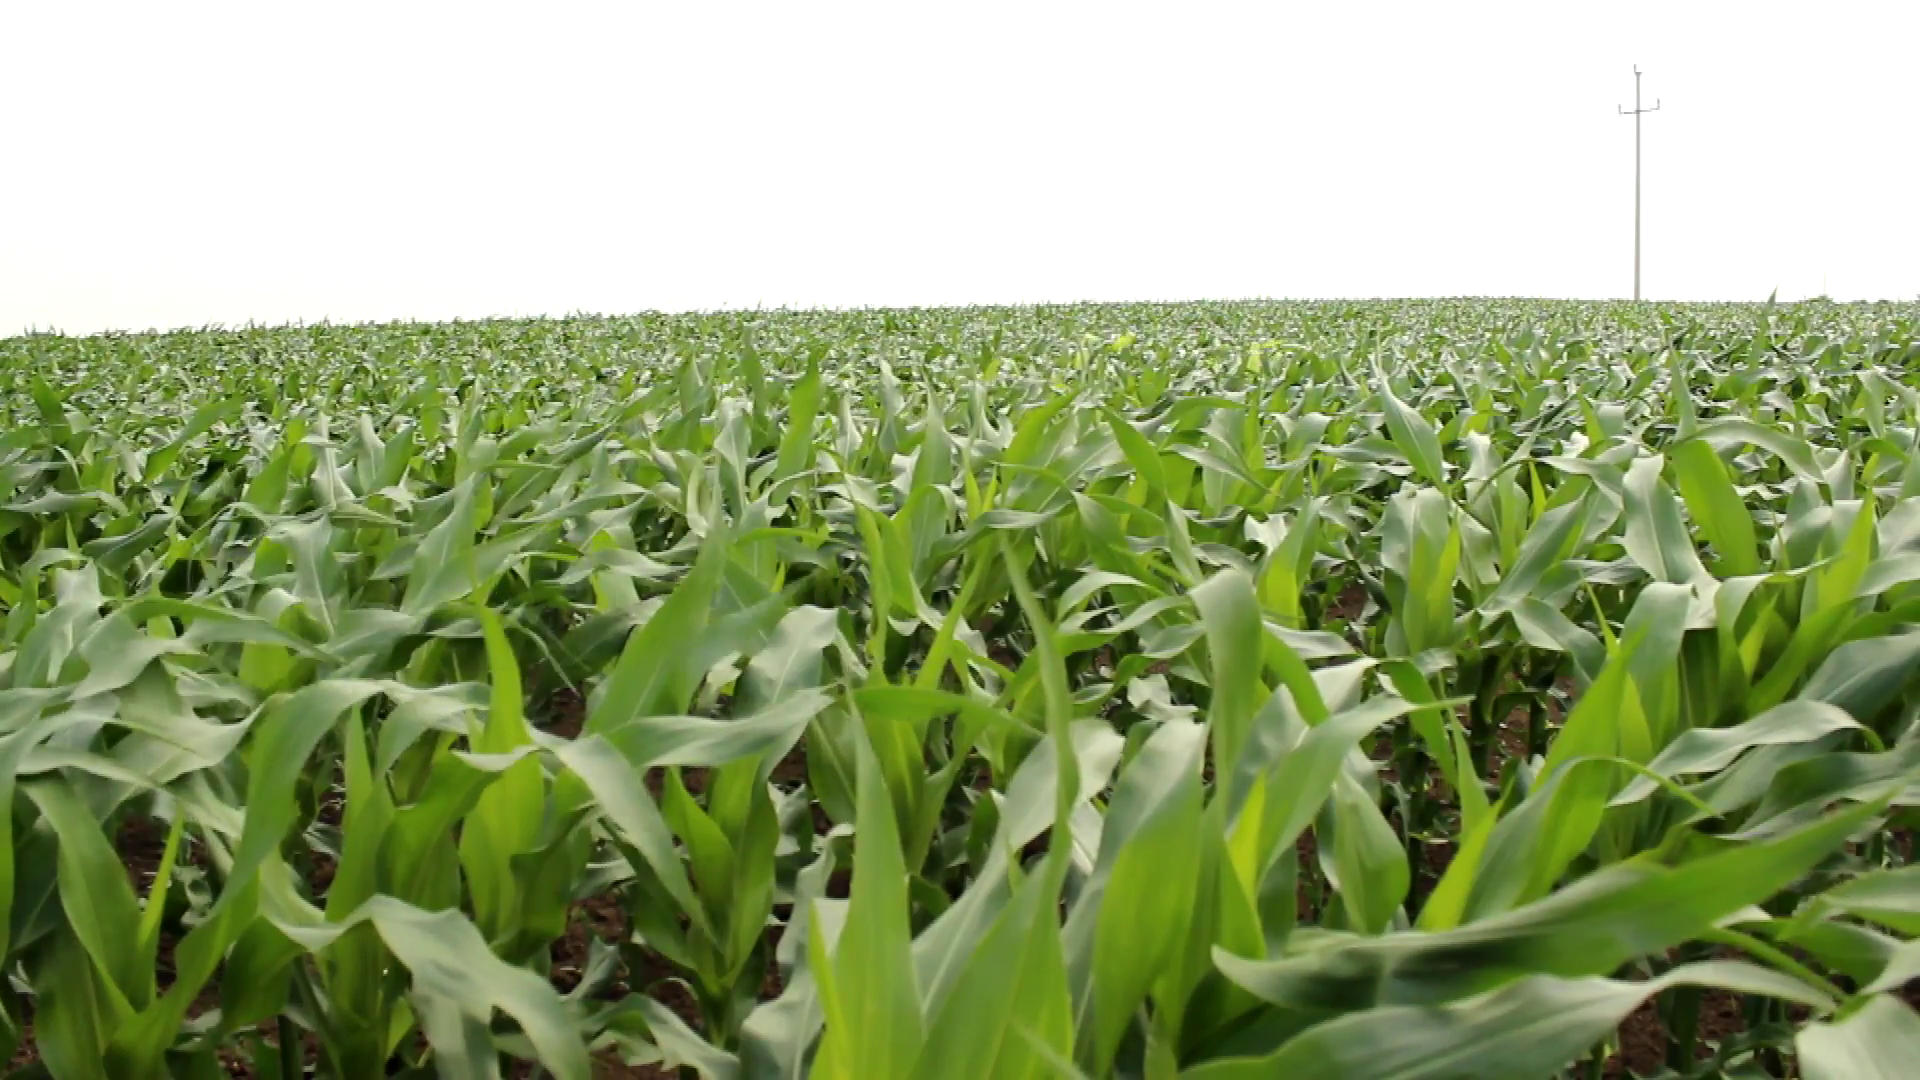 Young Green Corn Field 03.mov Stock Video Footage - VideoBlocks